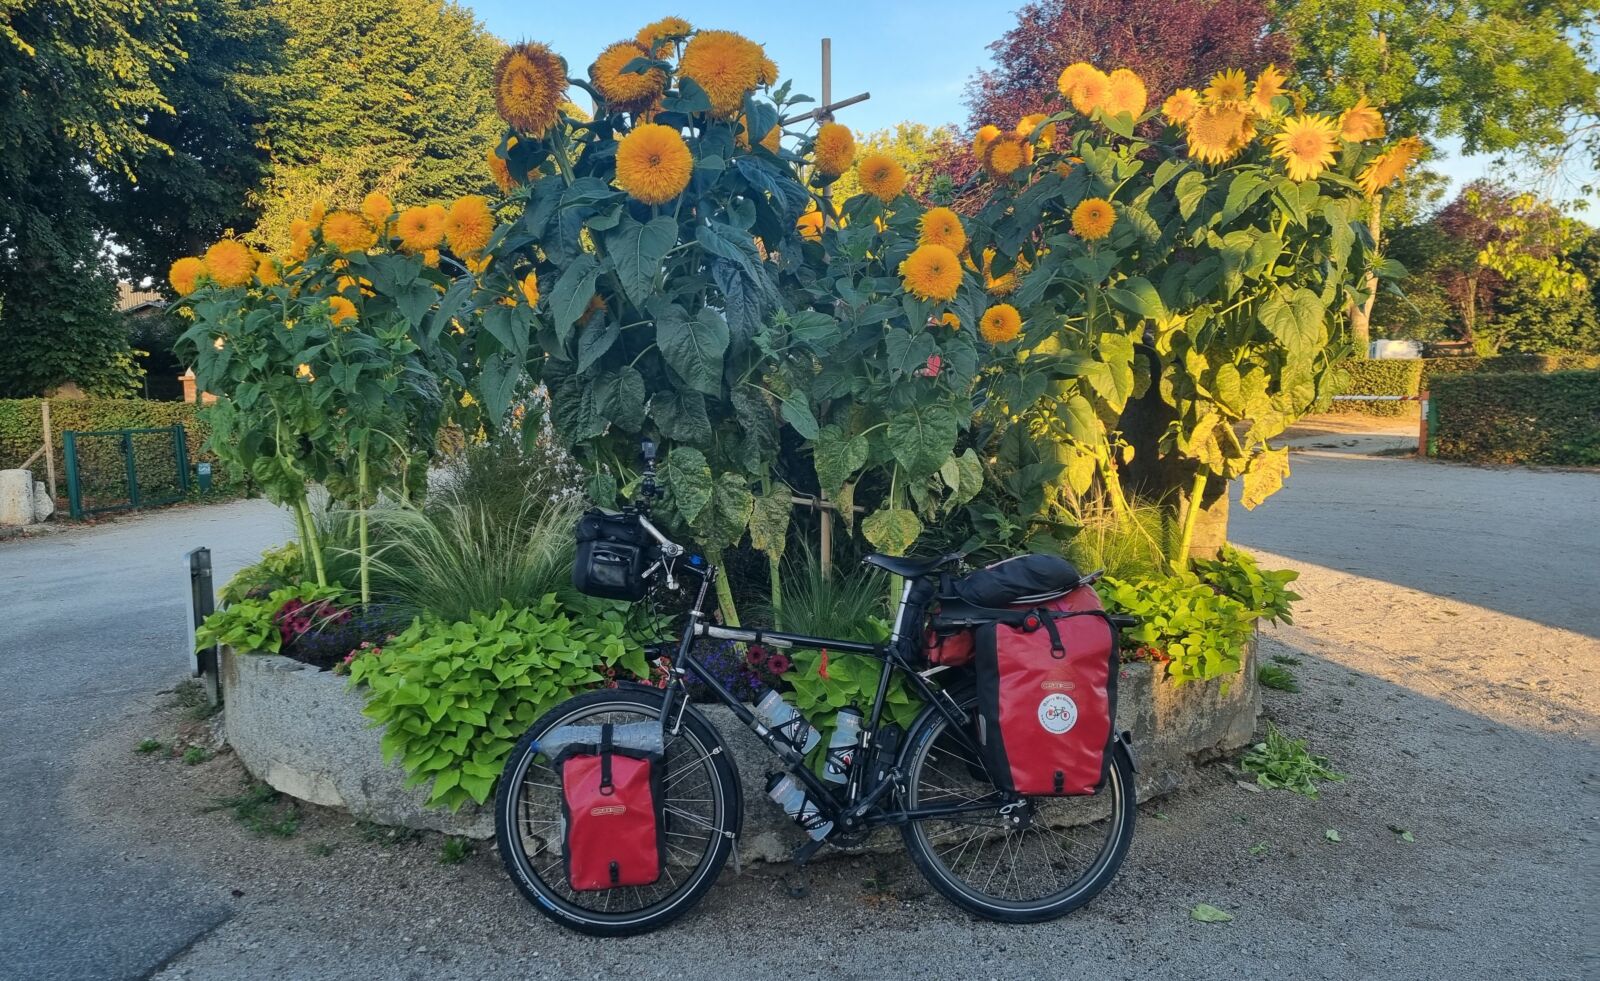 Bike and flowers